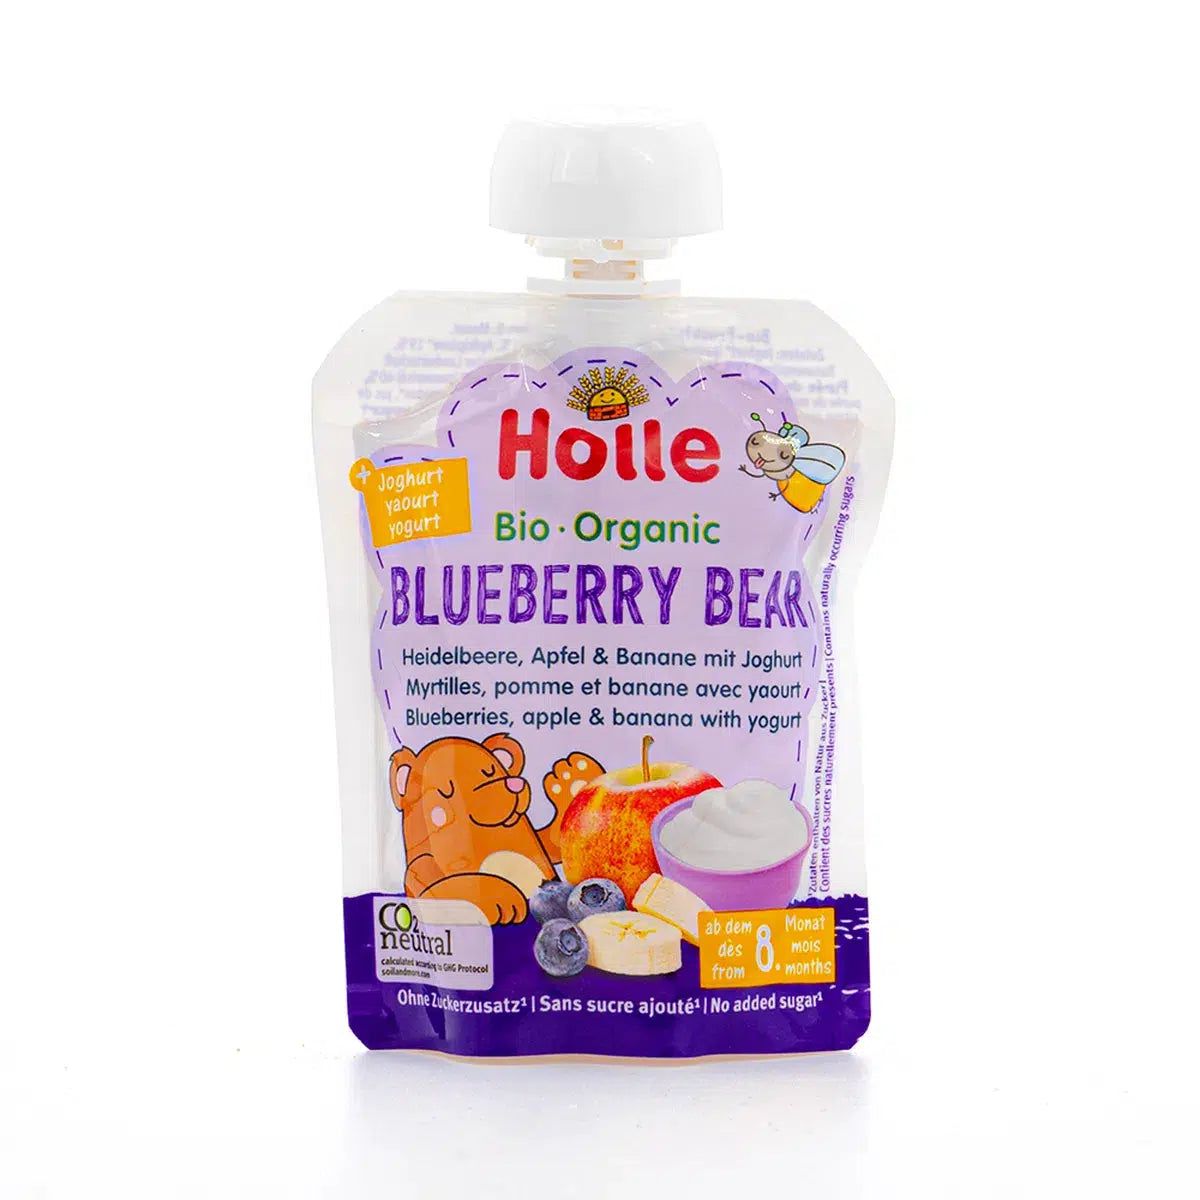 Holle Blueberry Bear: Blueberry, Apple, Banana & Yogurt (8+ Months) - 12 Pouches